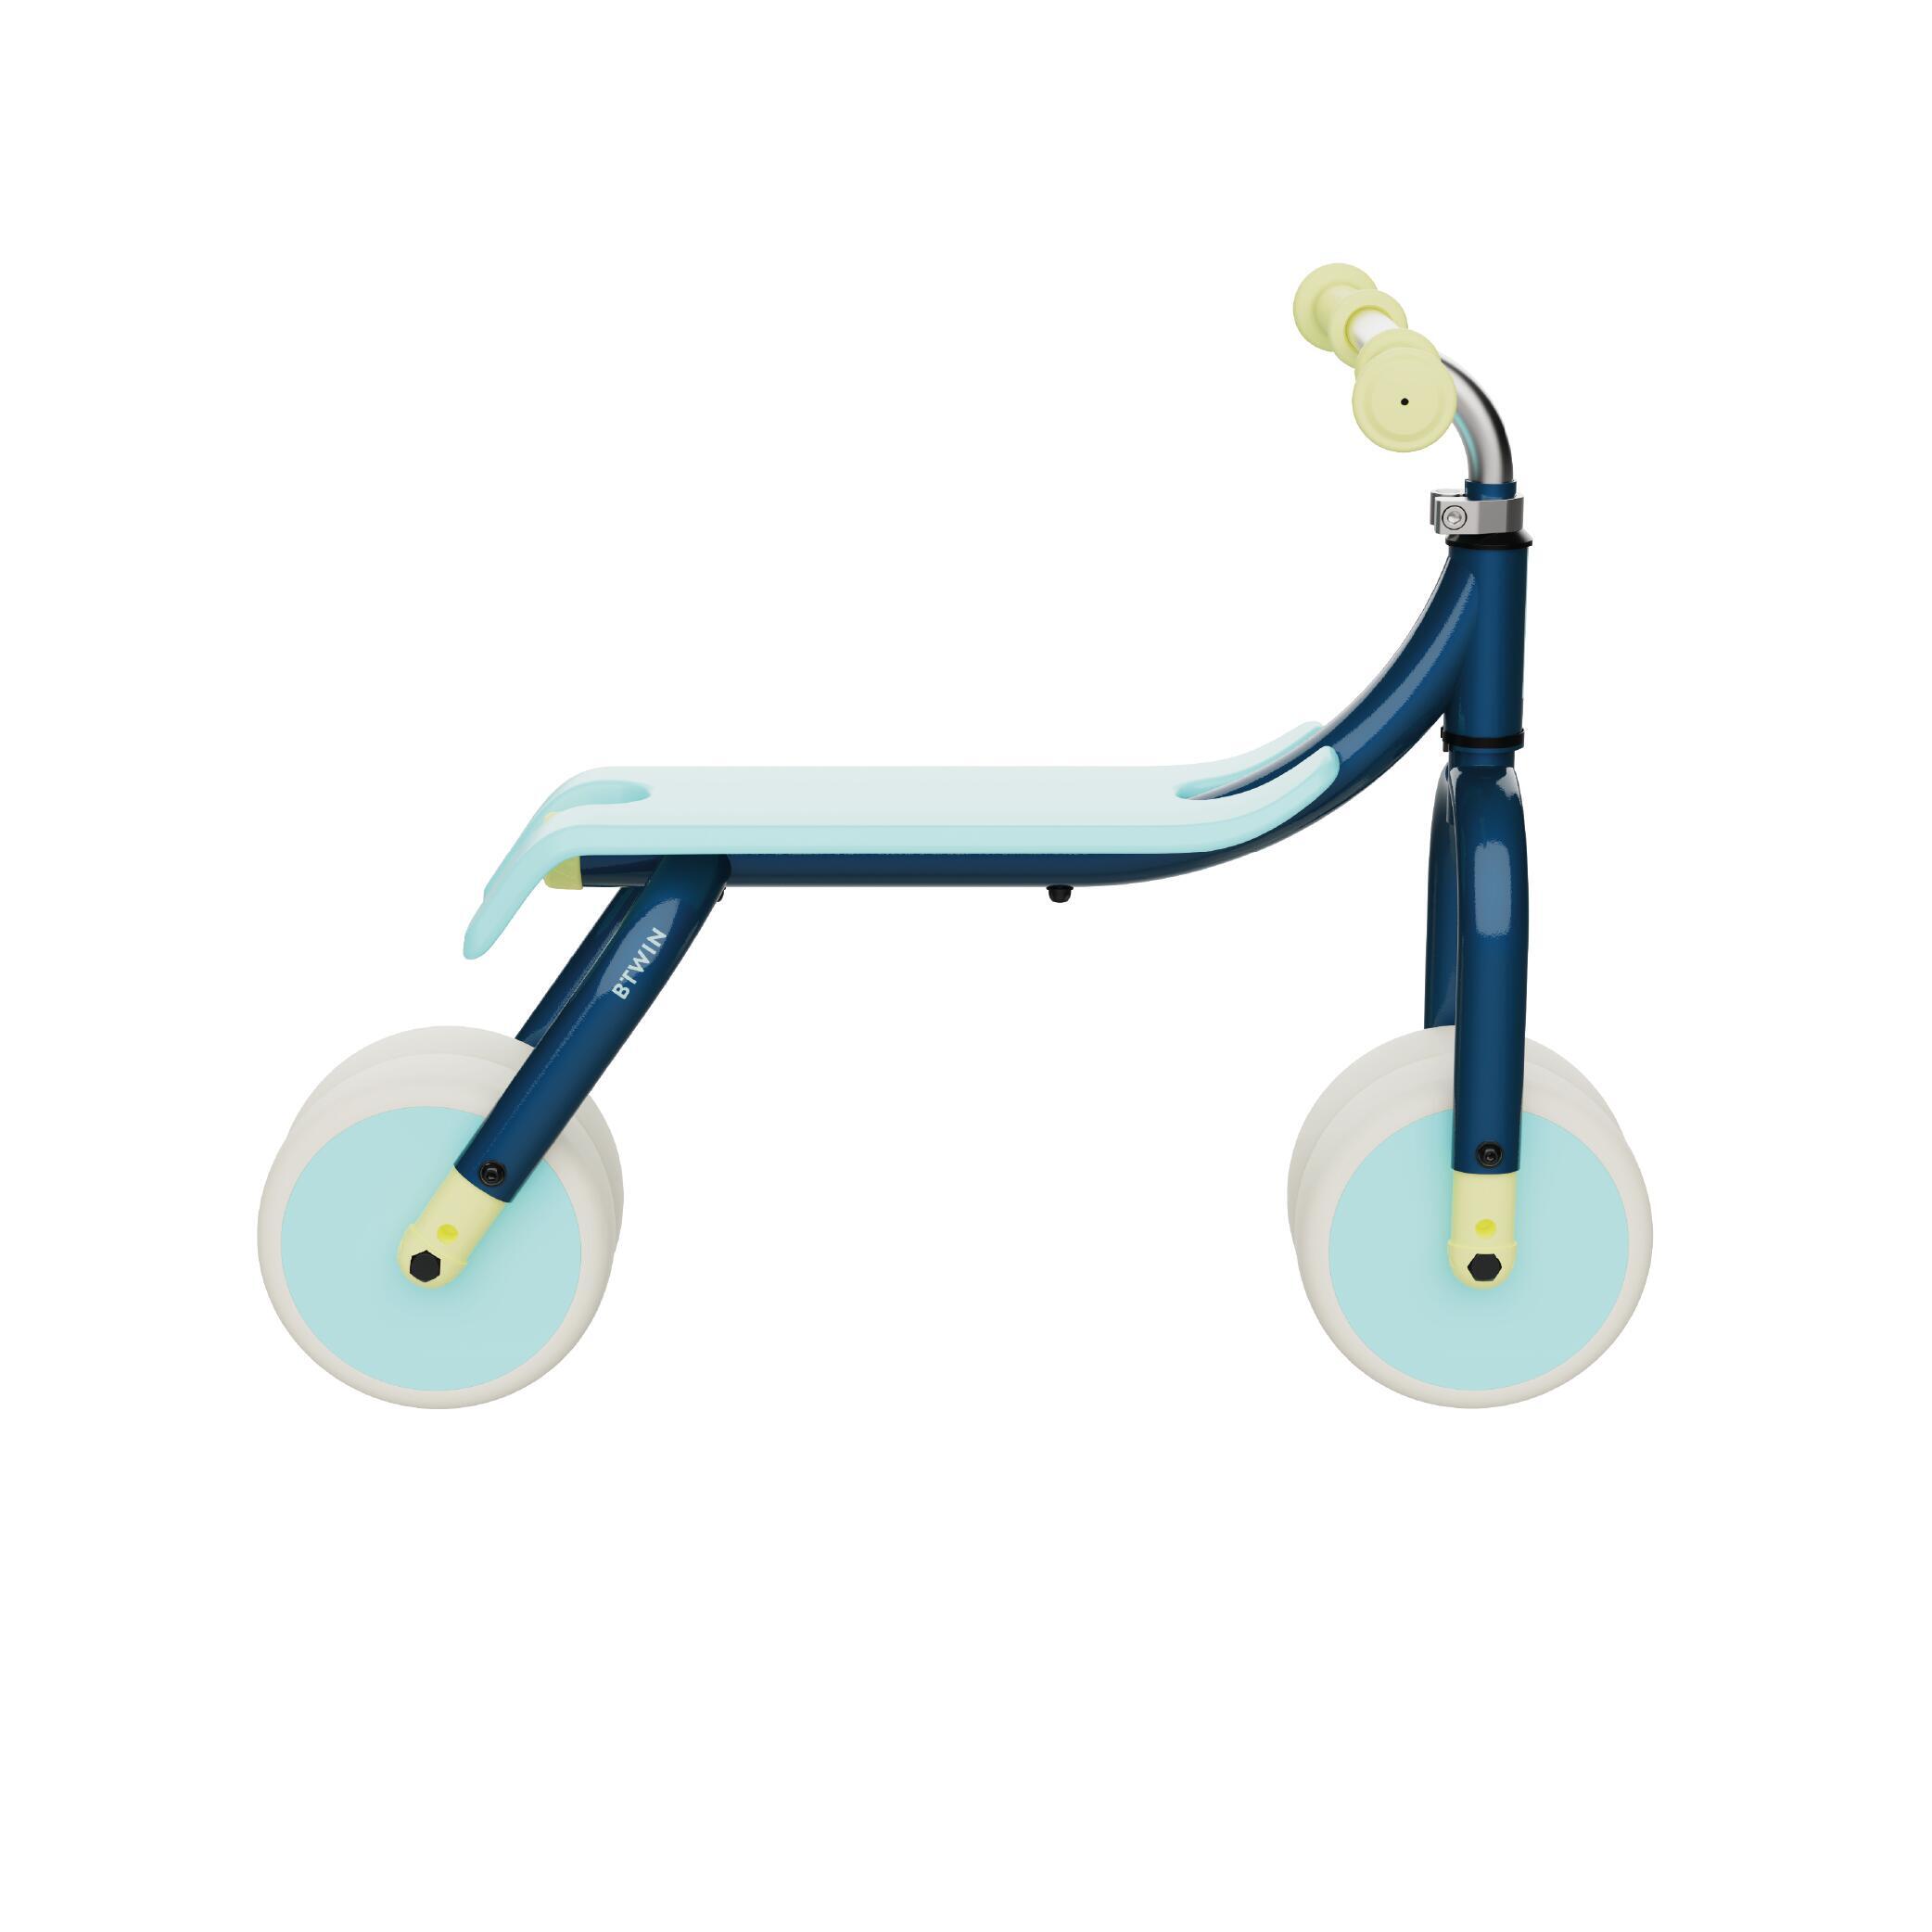 Convertible 2-in-1 Ride-On to Balance Bike - Blue/Cream 4/13